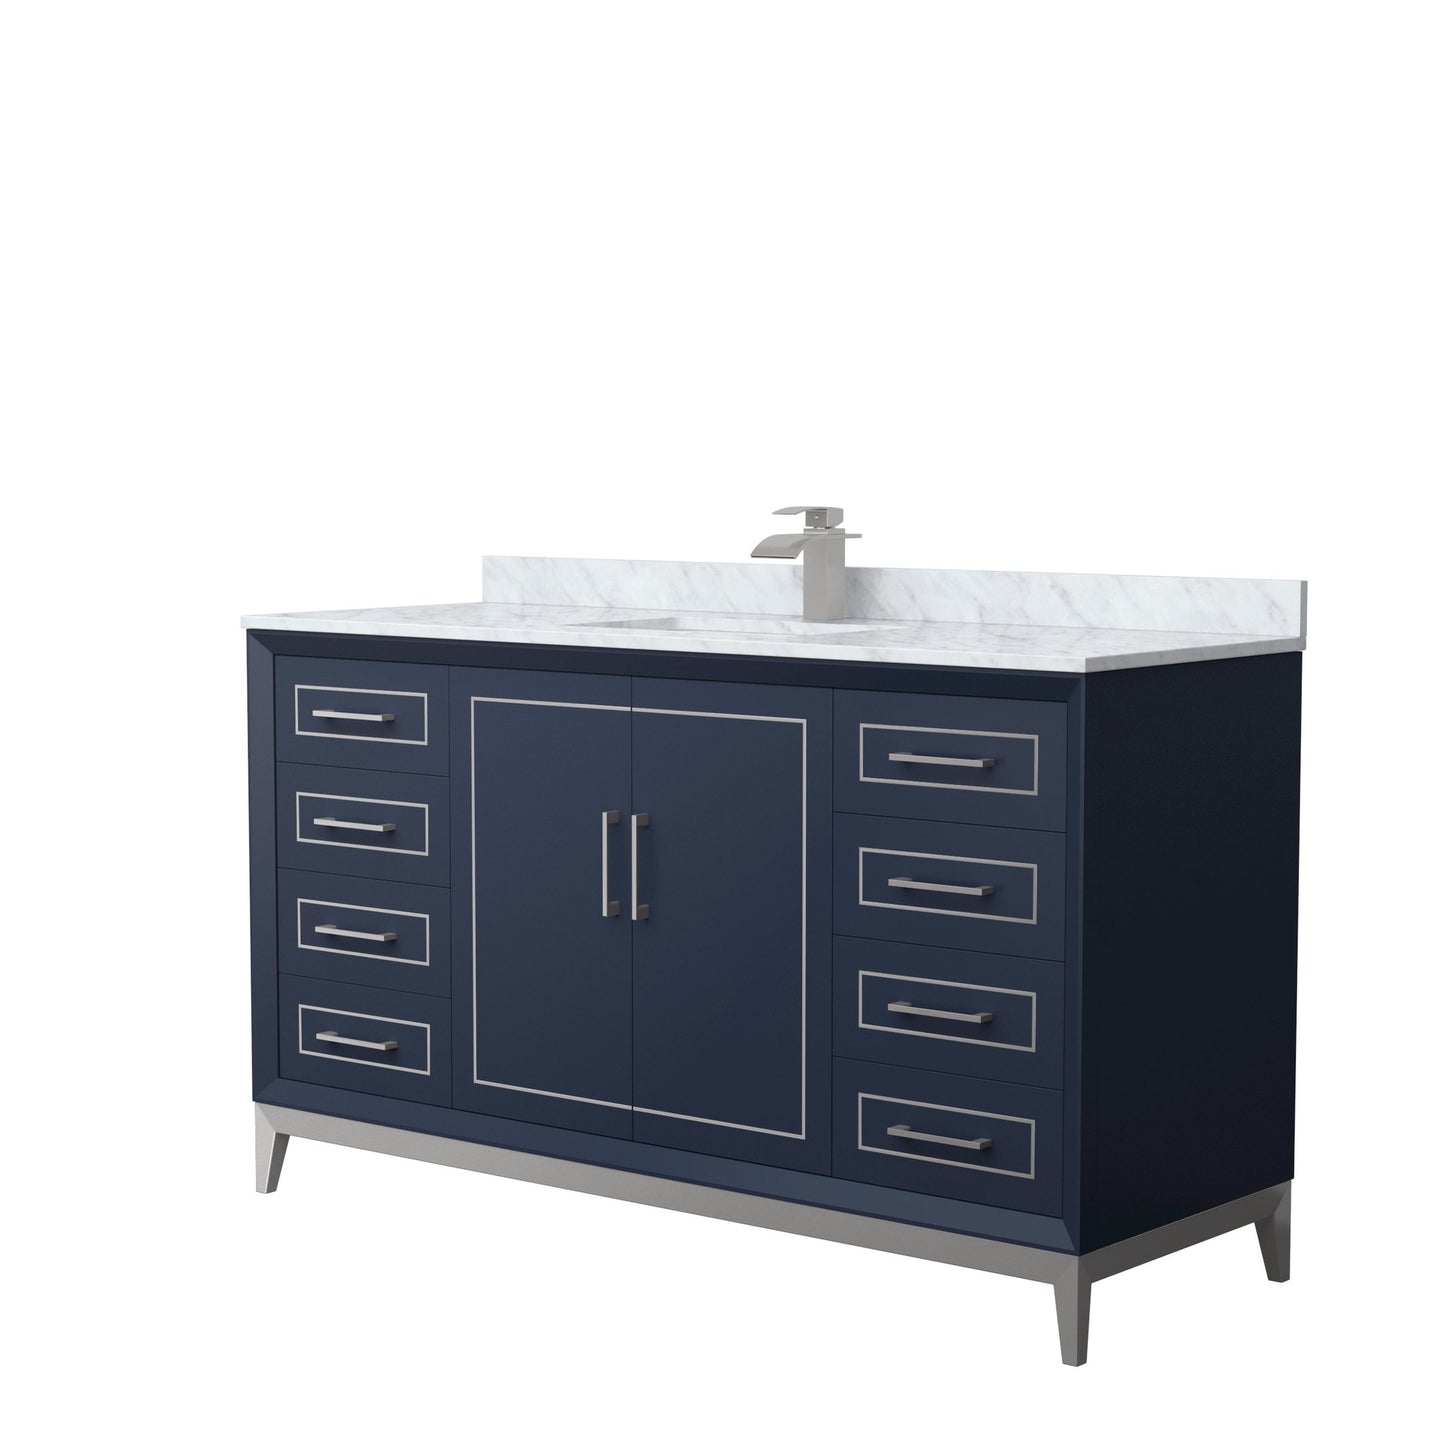 Wyndham Collection Marlena 60" Single Bathroom Vanity in Dark Blue, White Carrara Marble Countertop, Undermount Square Sink, Brushed Nickel Trim